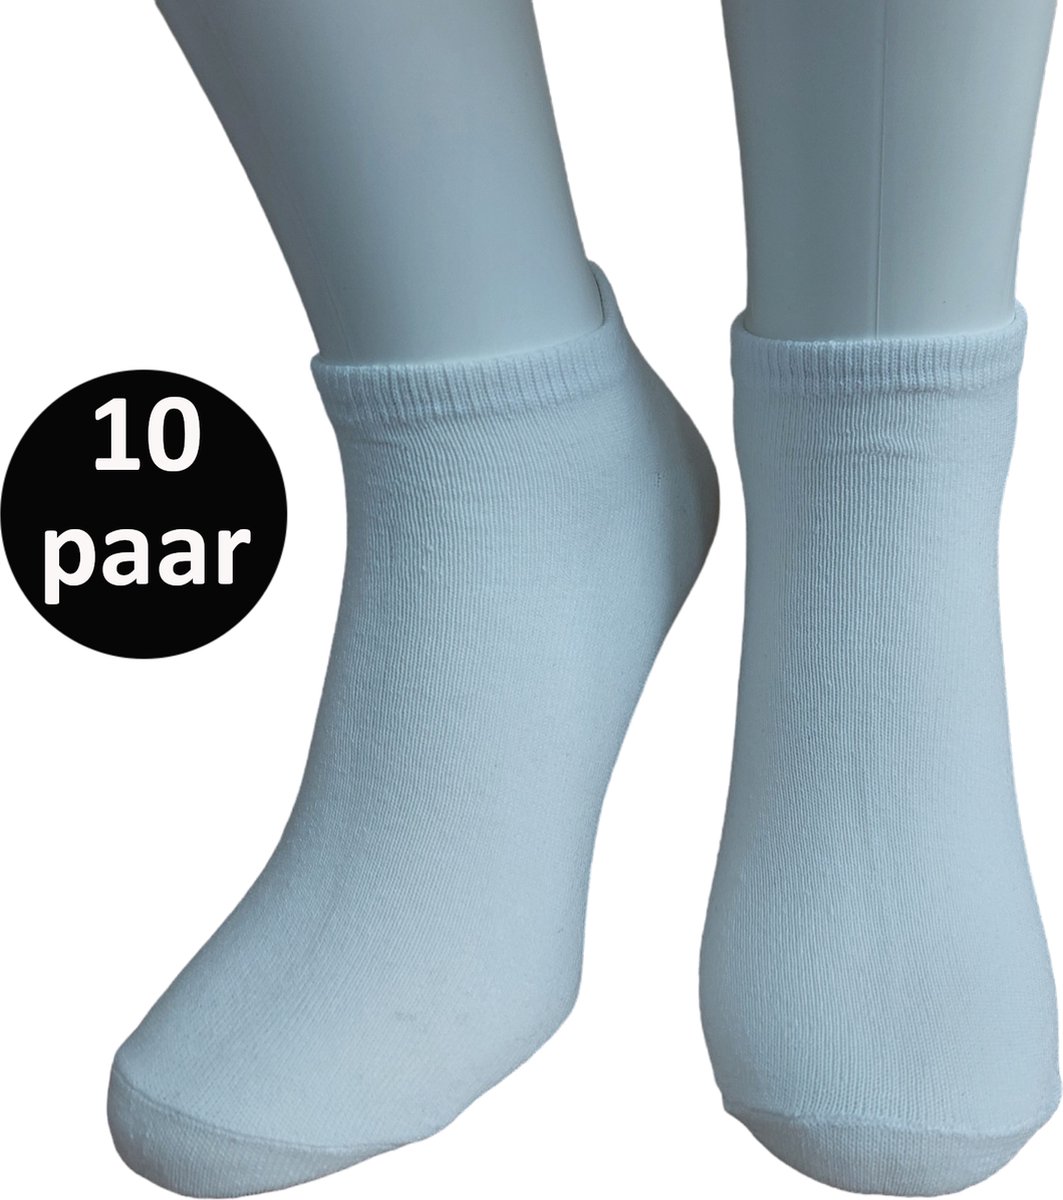 WeirdoSox Sneaker Sokken - 10 paar - Unisex - Wit - Maat 43/46 - Enkel sokken - Korte sokken